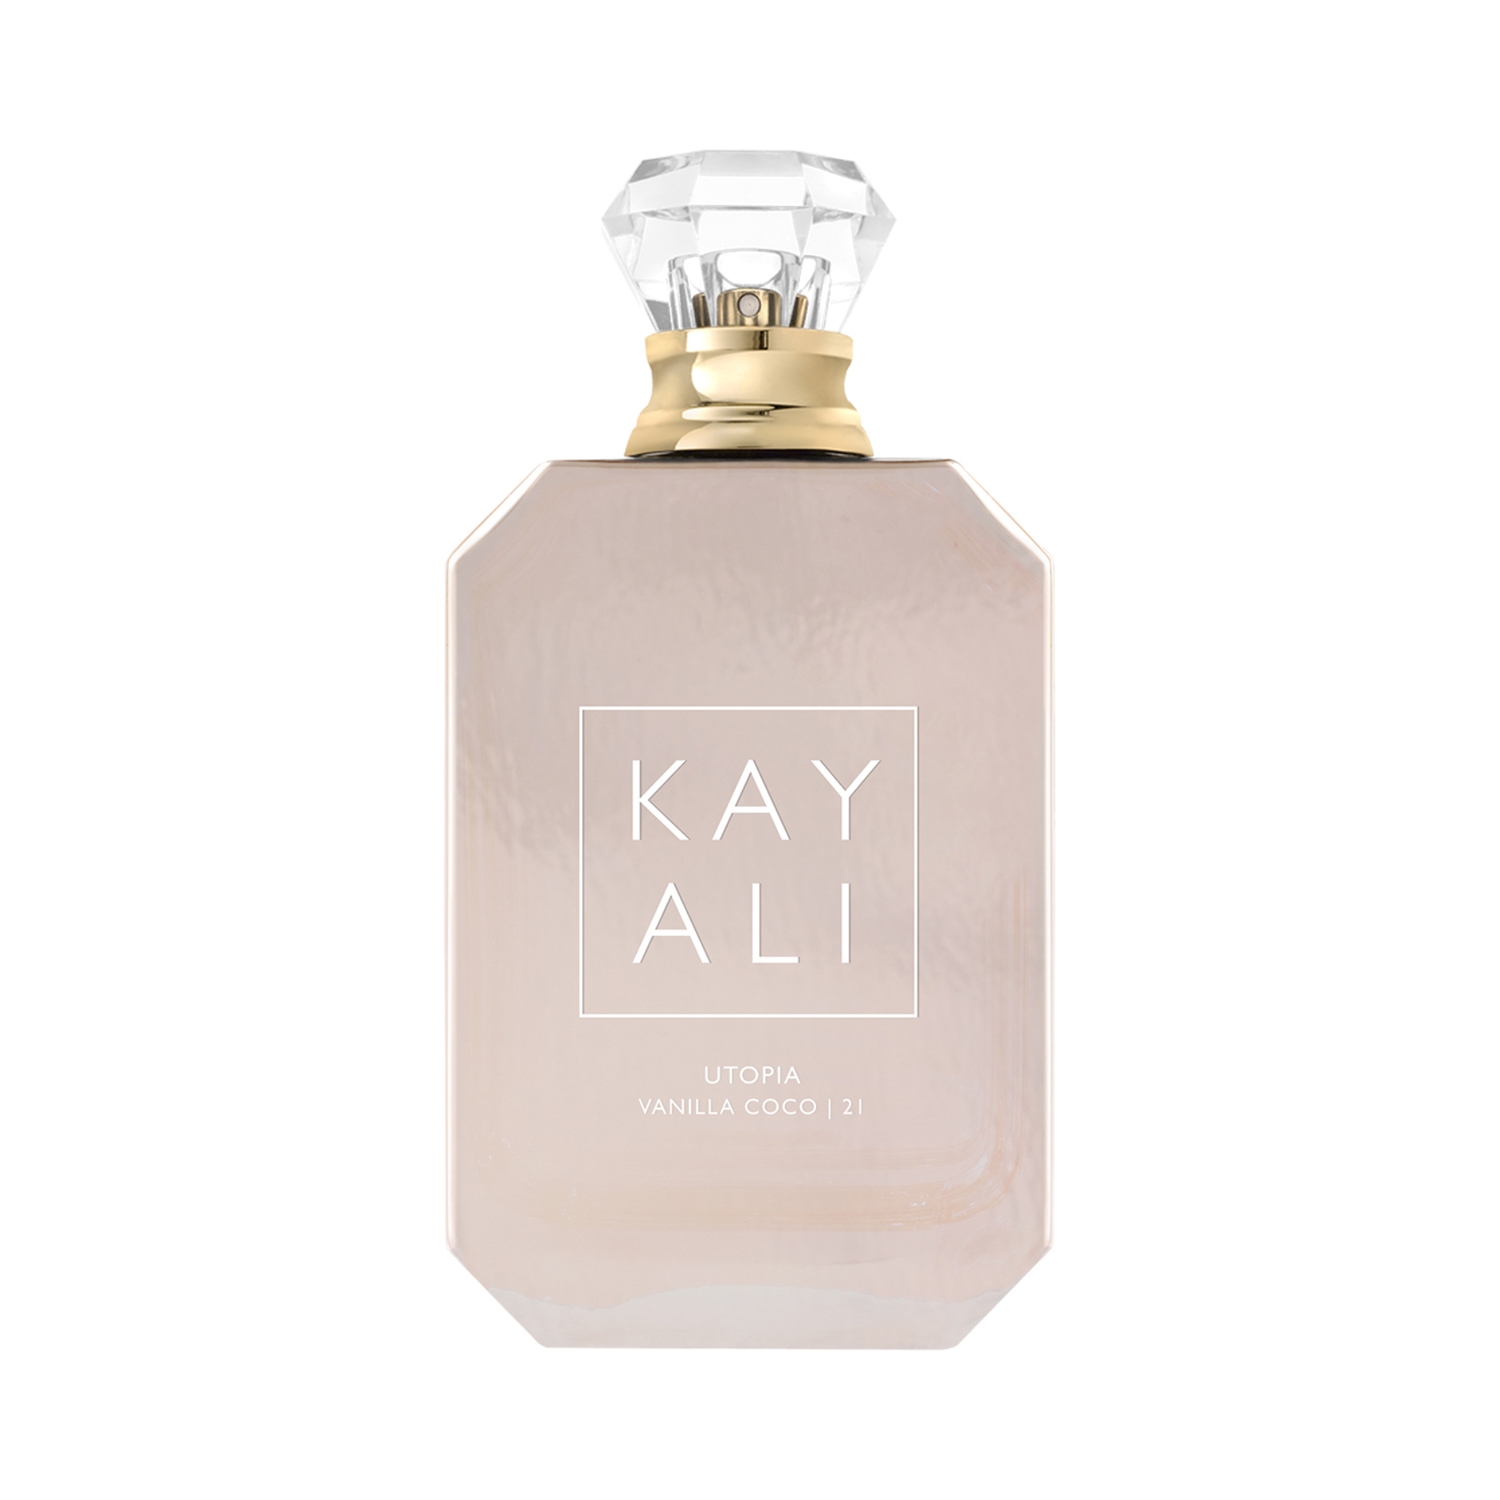 Kayali | Kayali Utopia Vanilla Coco 21 Eau De Parfum Intense (50ml)